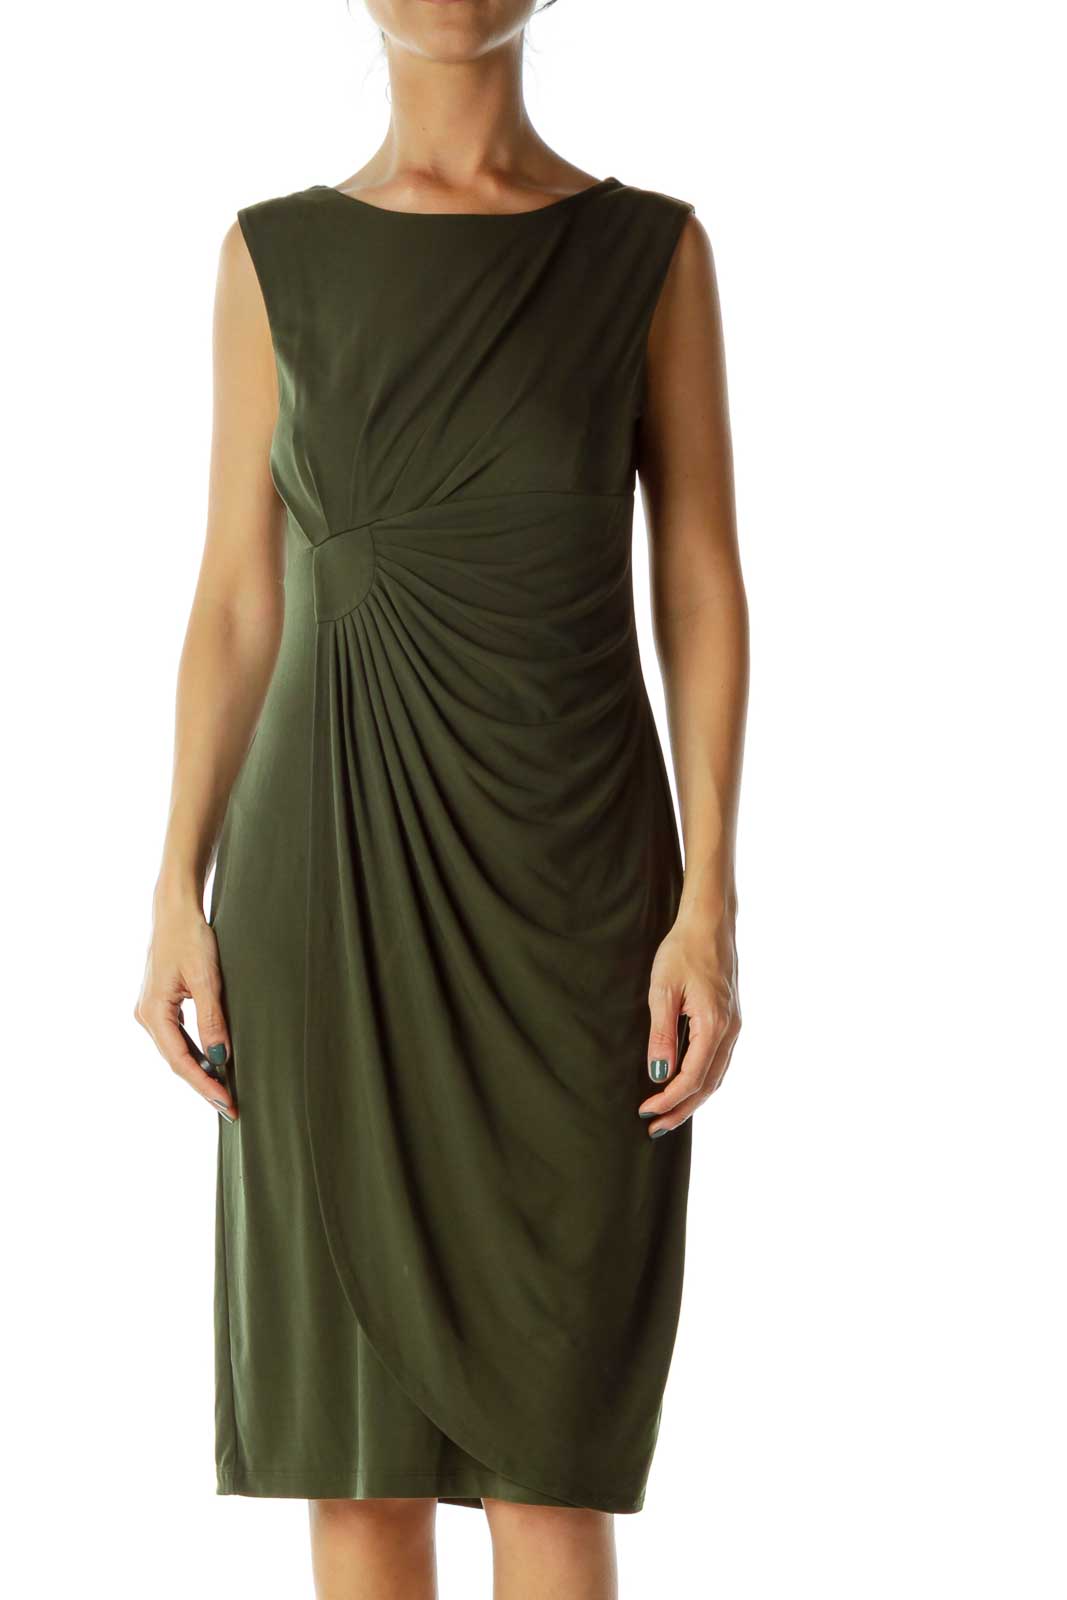 Dark Green Ruched Dress Front